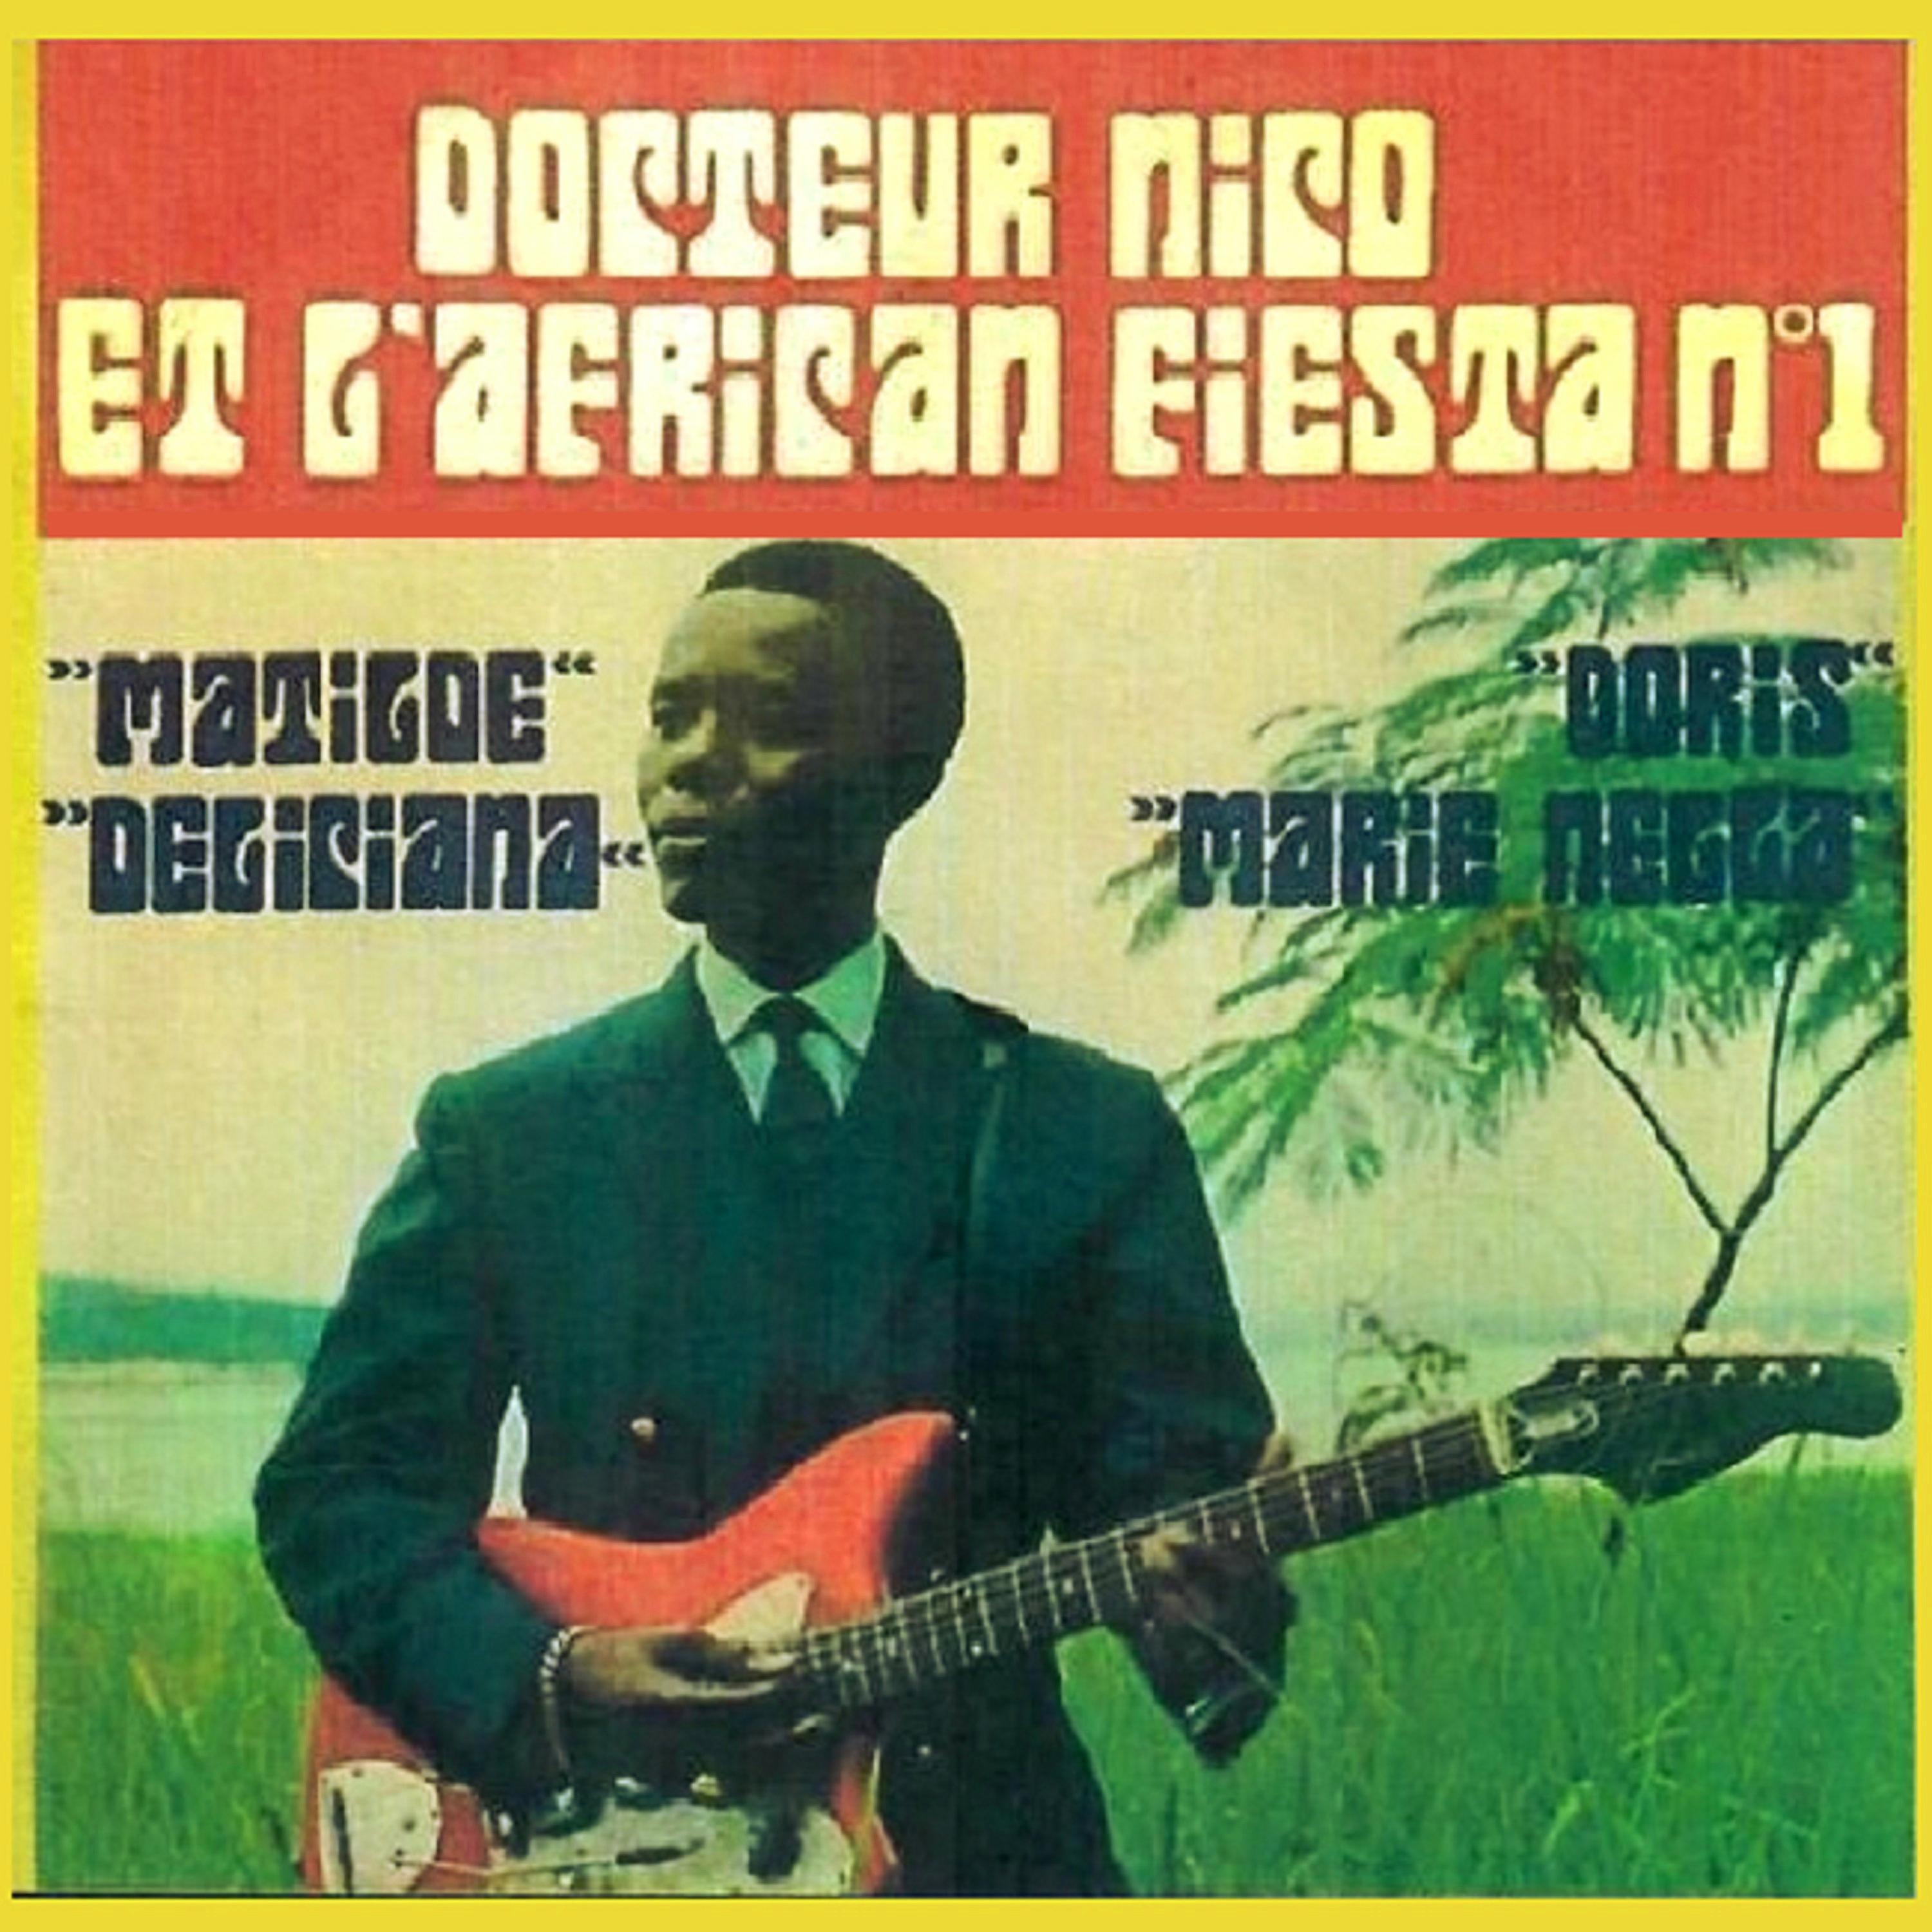 Постер альбома "Matigde" "Decisiana" "Doris" "Marie Negga"